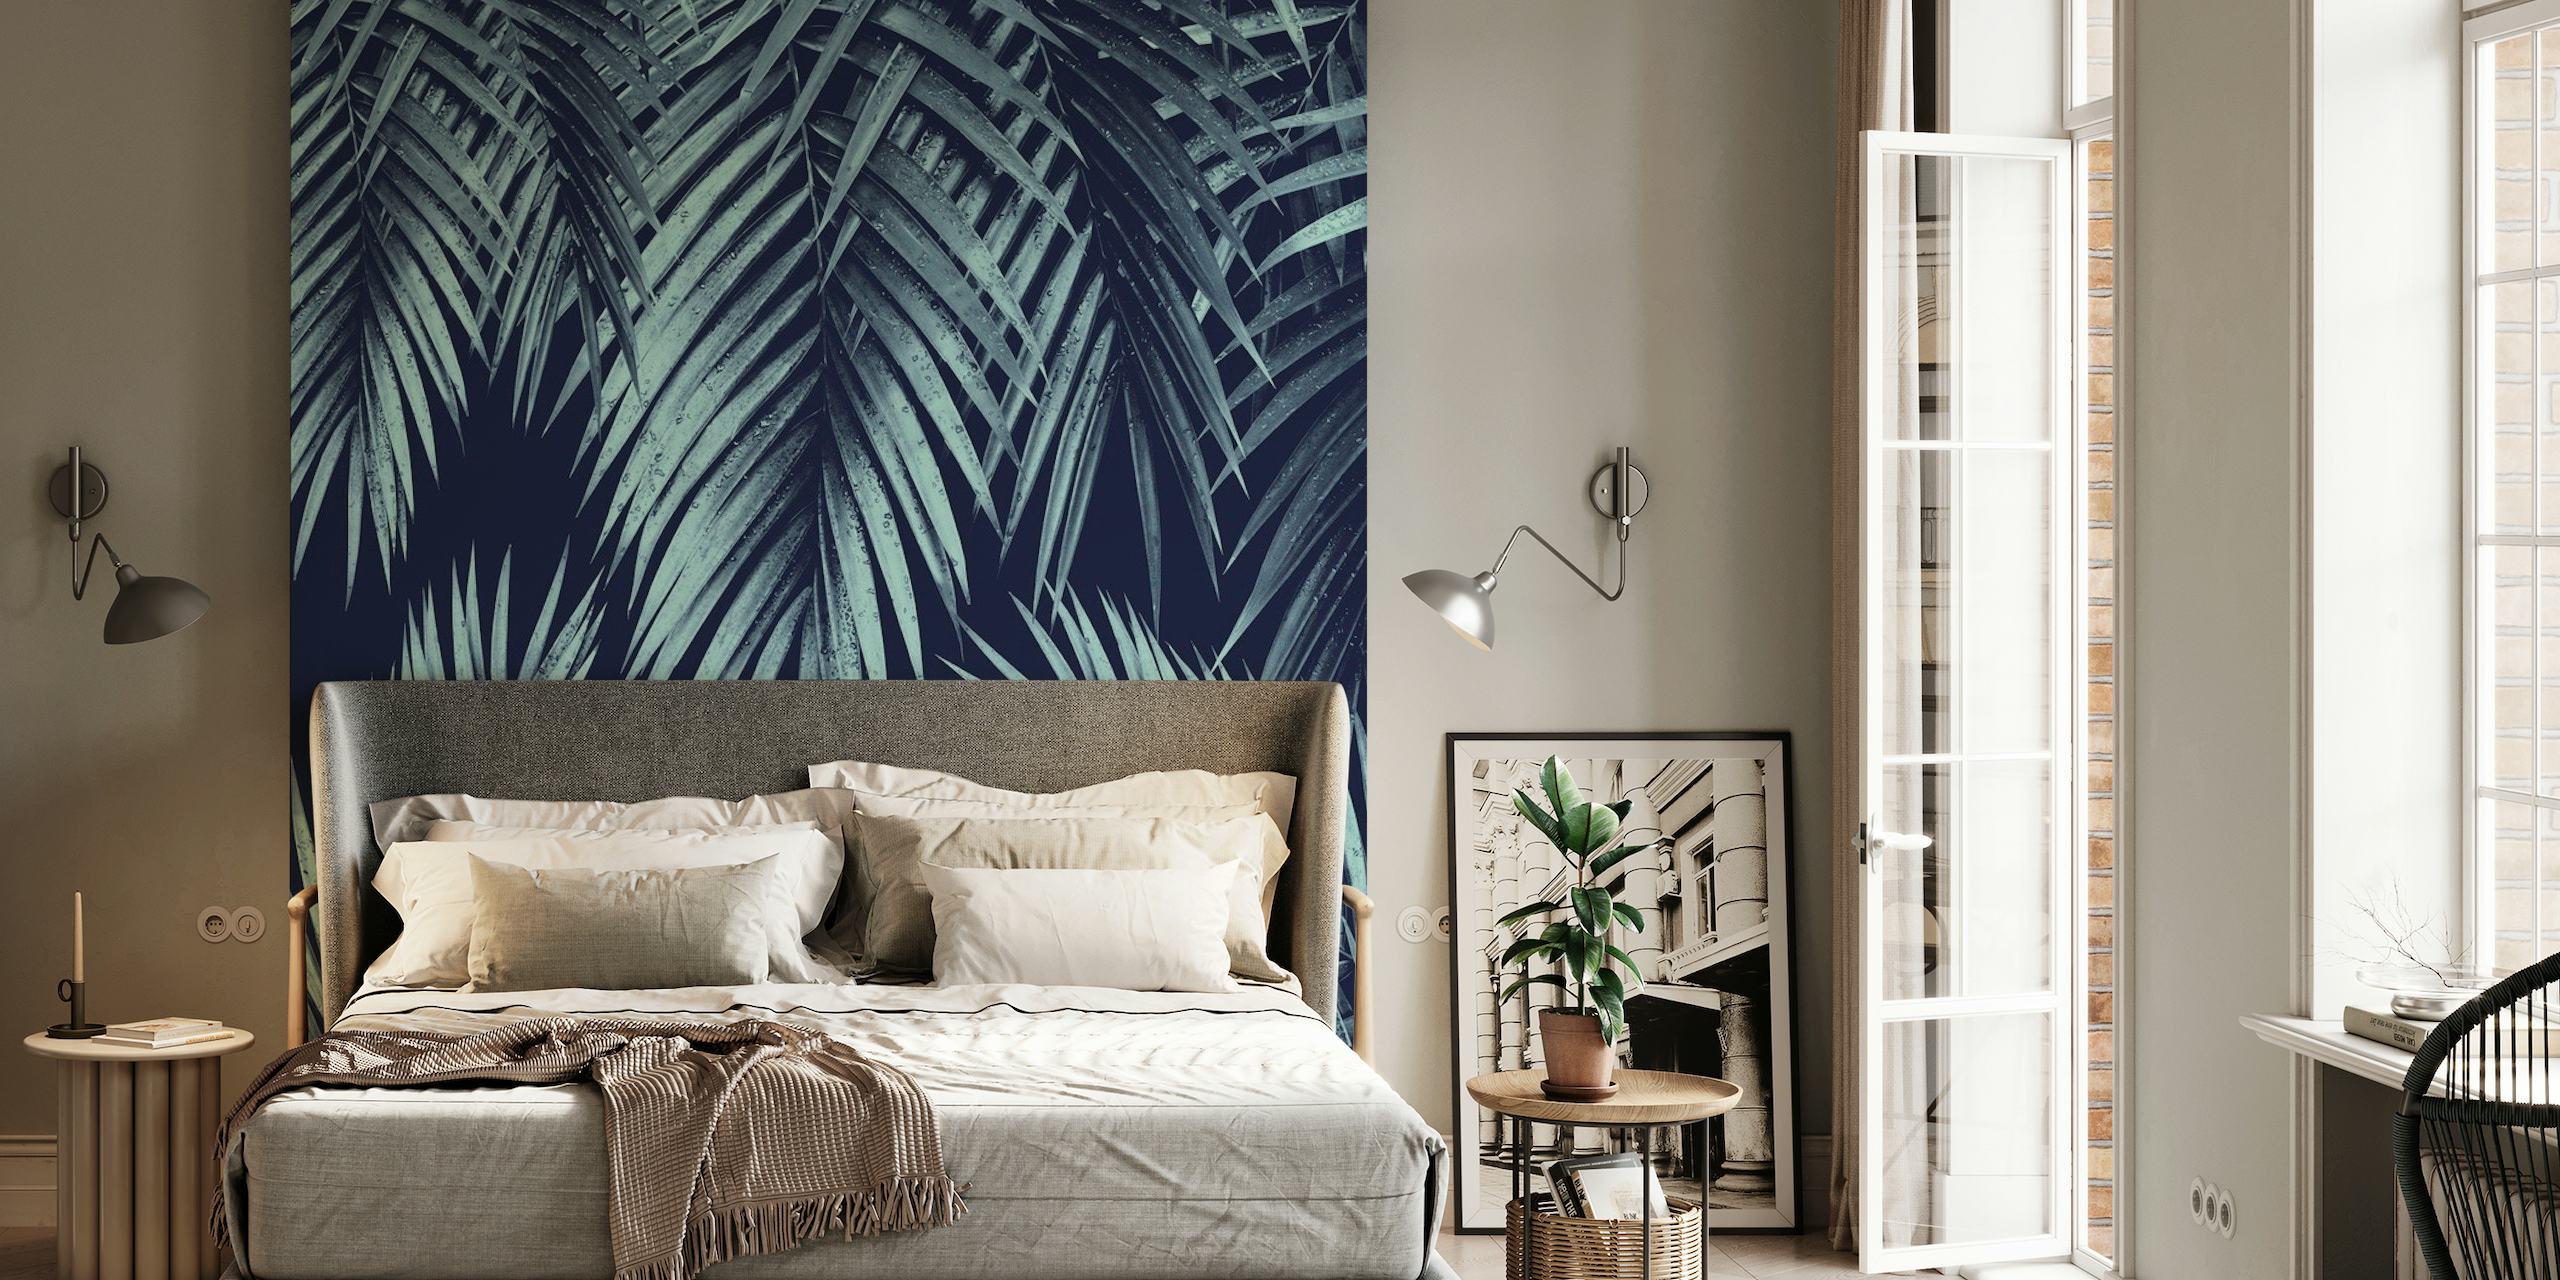 Fototapete Palm Leaf Jungle Night Vibes mit dunklem Hintergrund